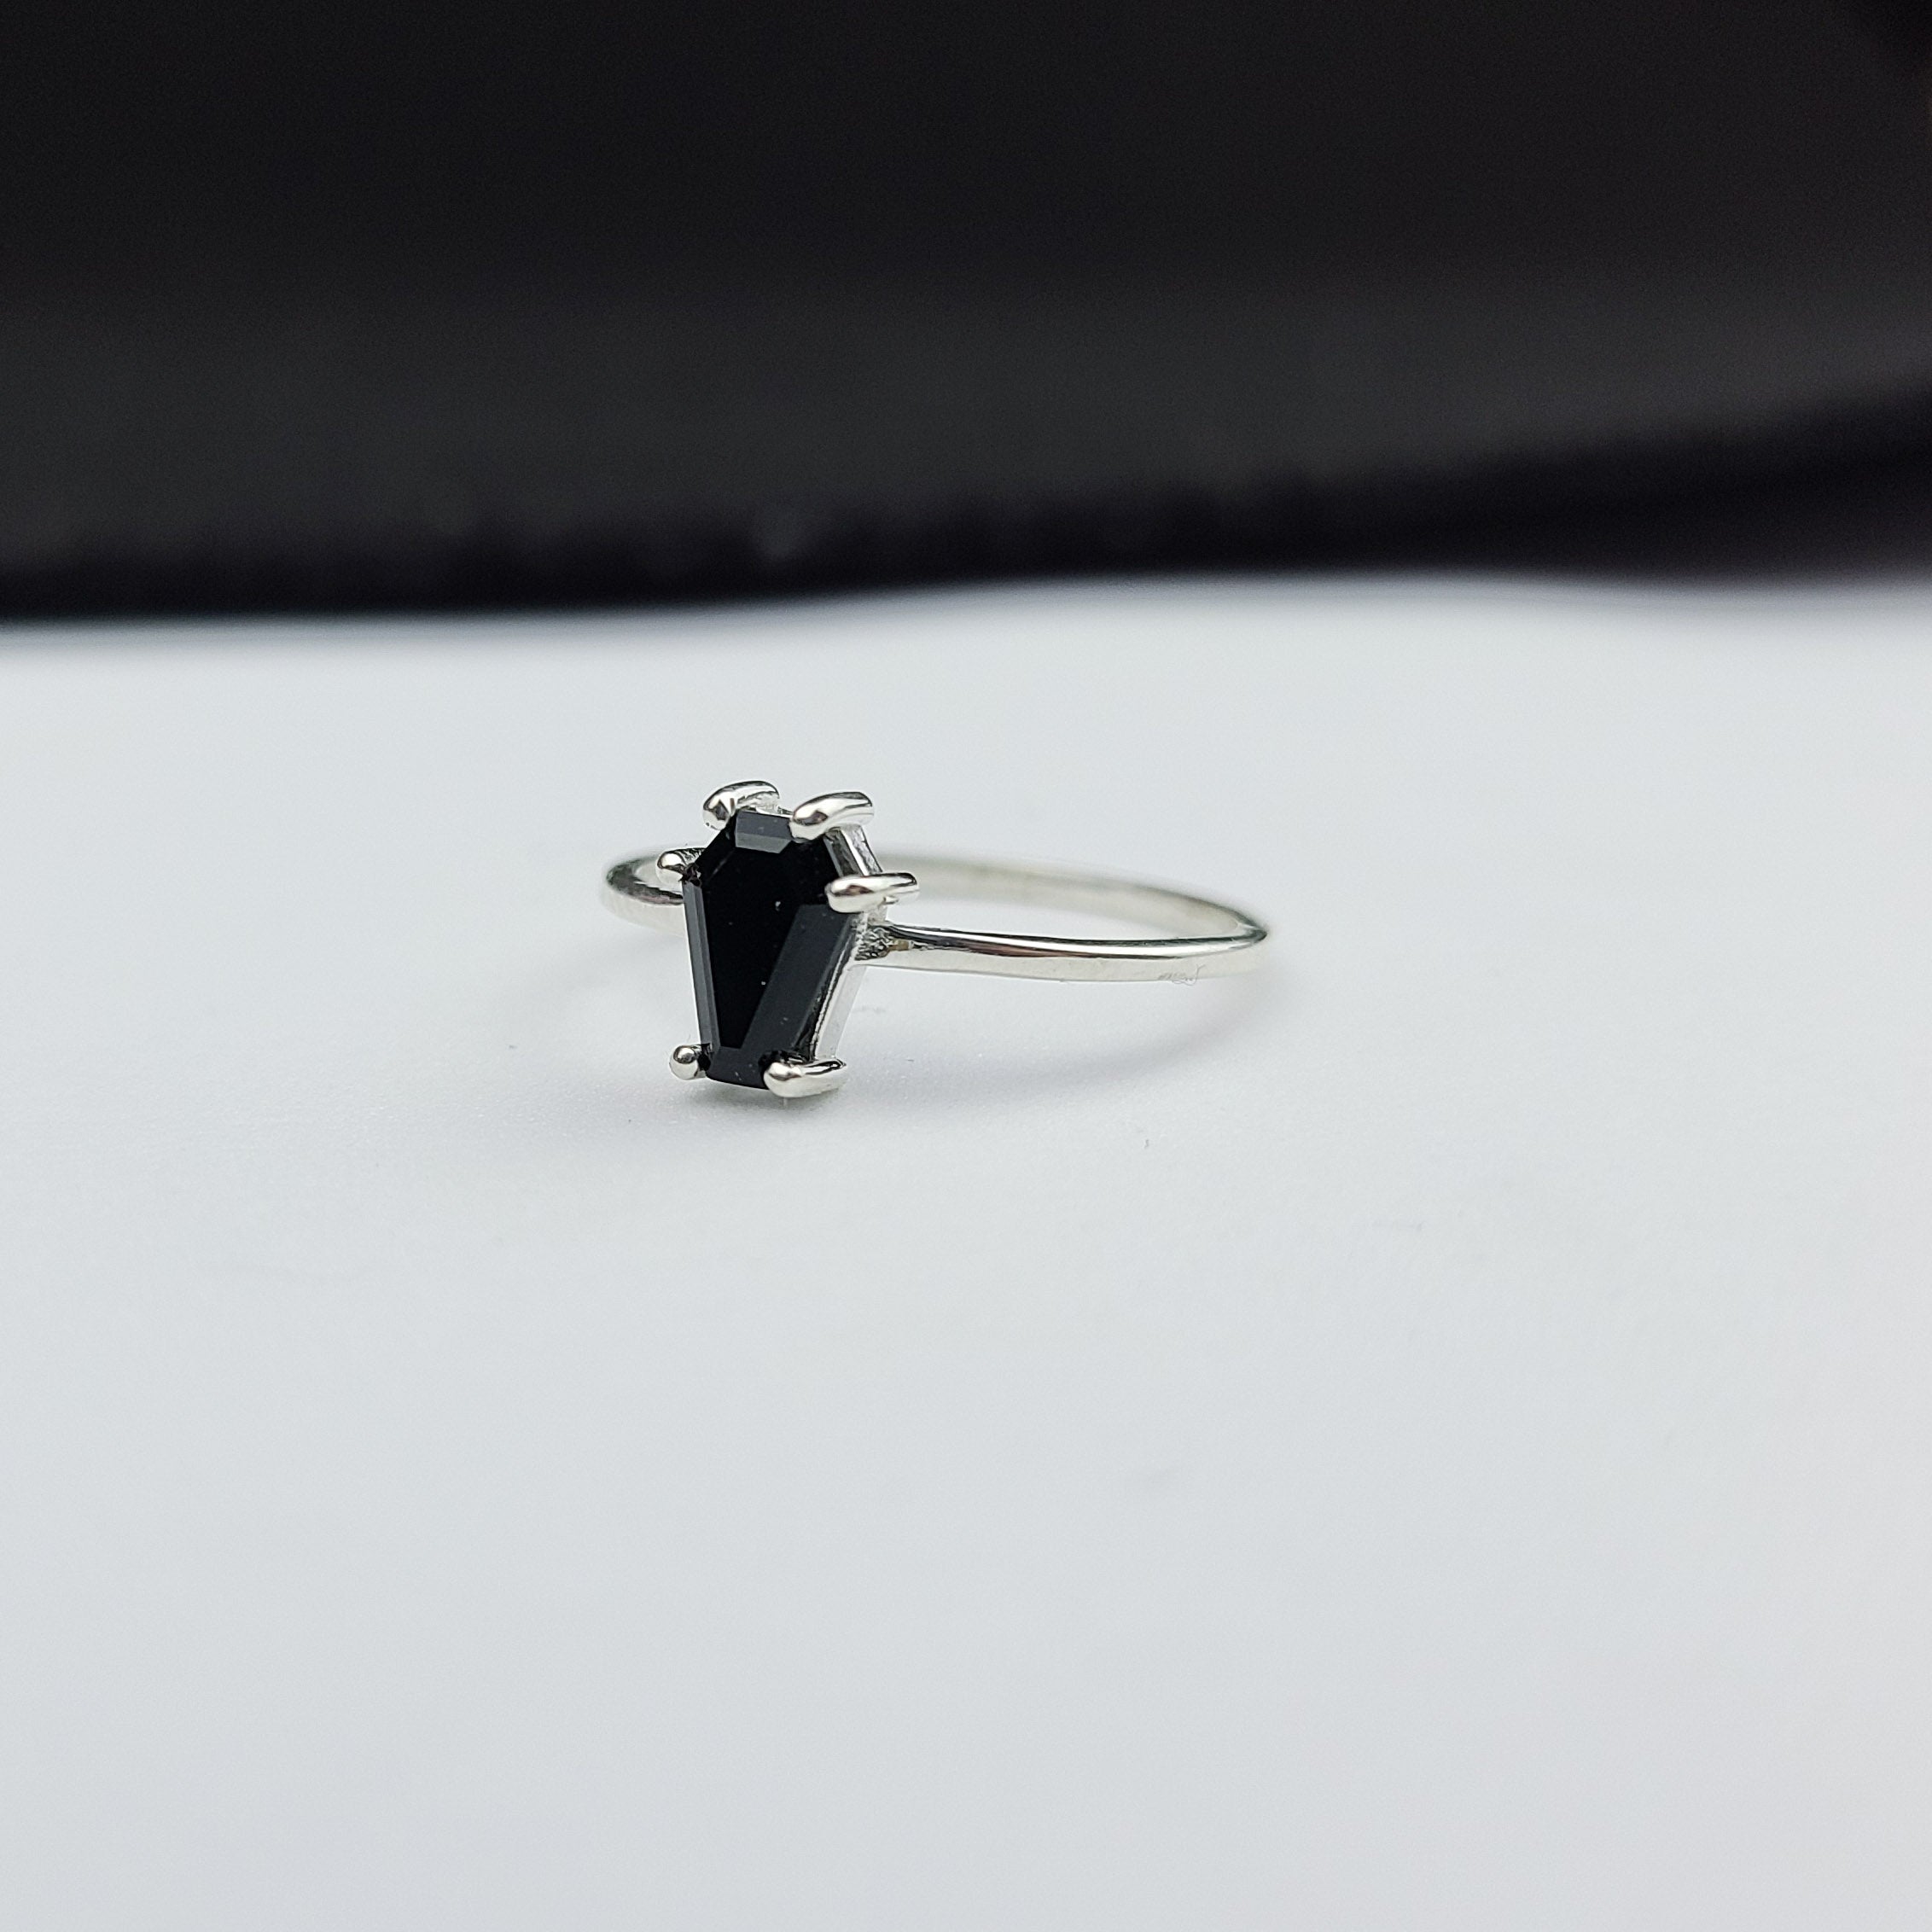 Black Coffin Engagement Ring - Inchoo Bijoux